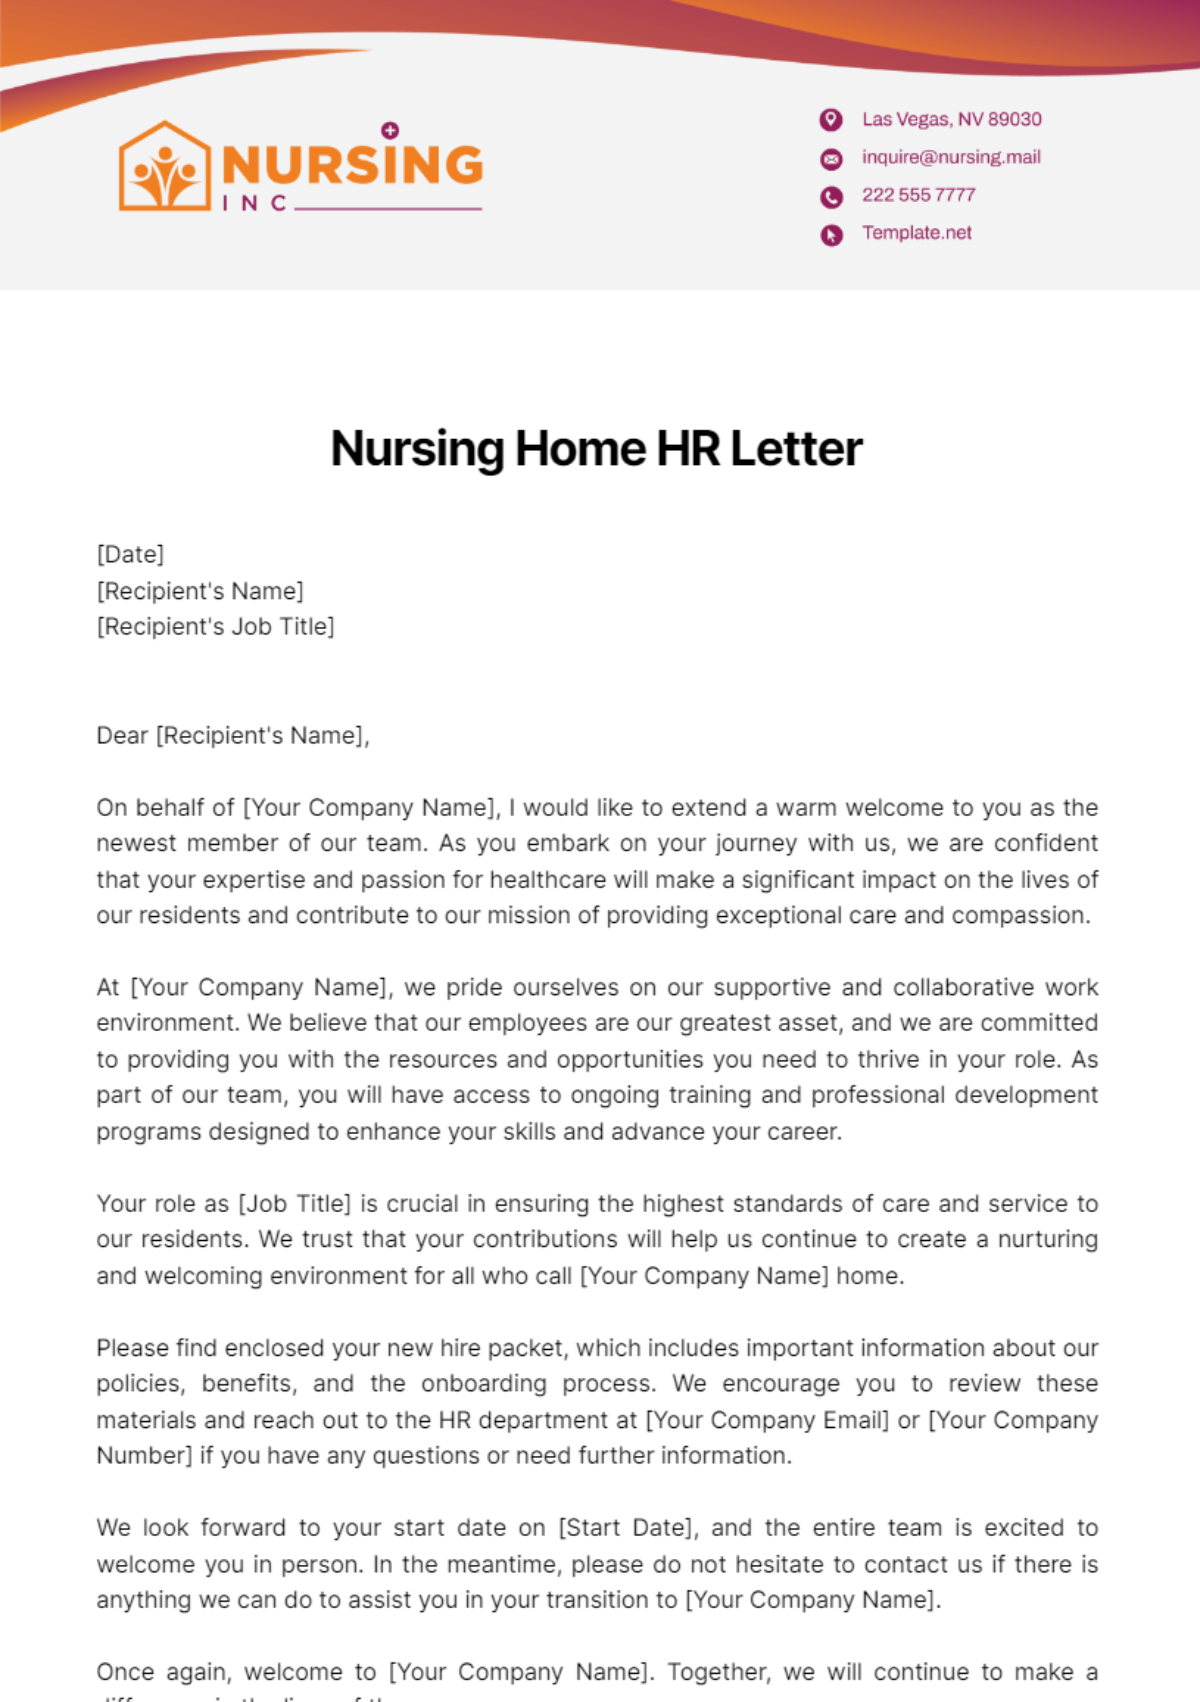 Nursing Home HR Letter Template